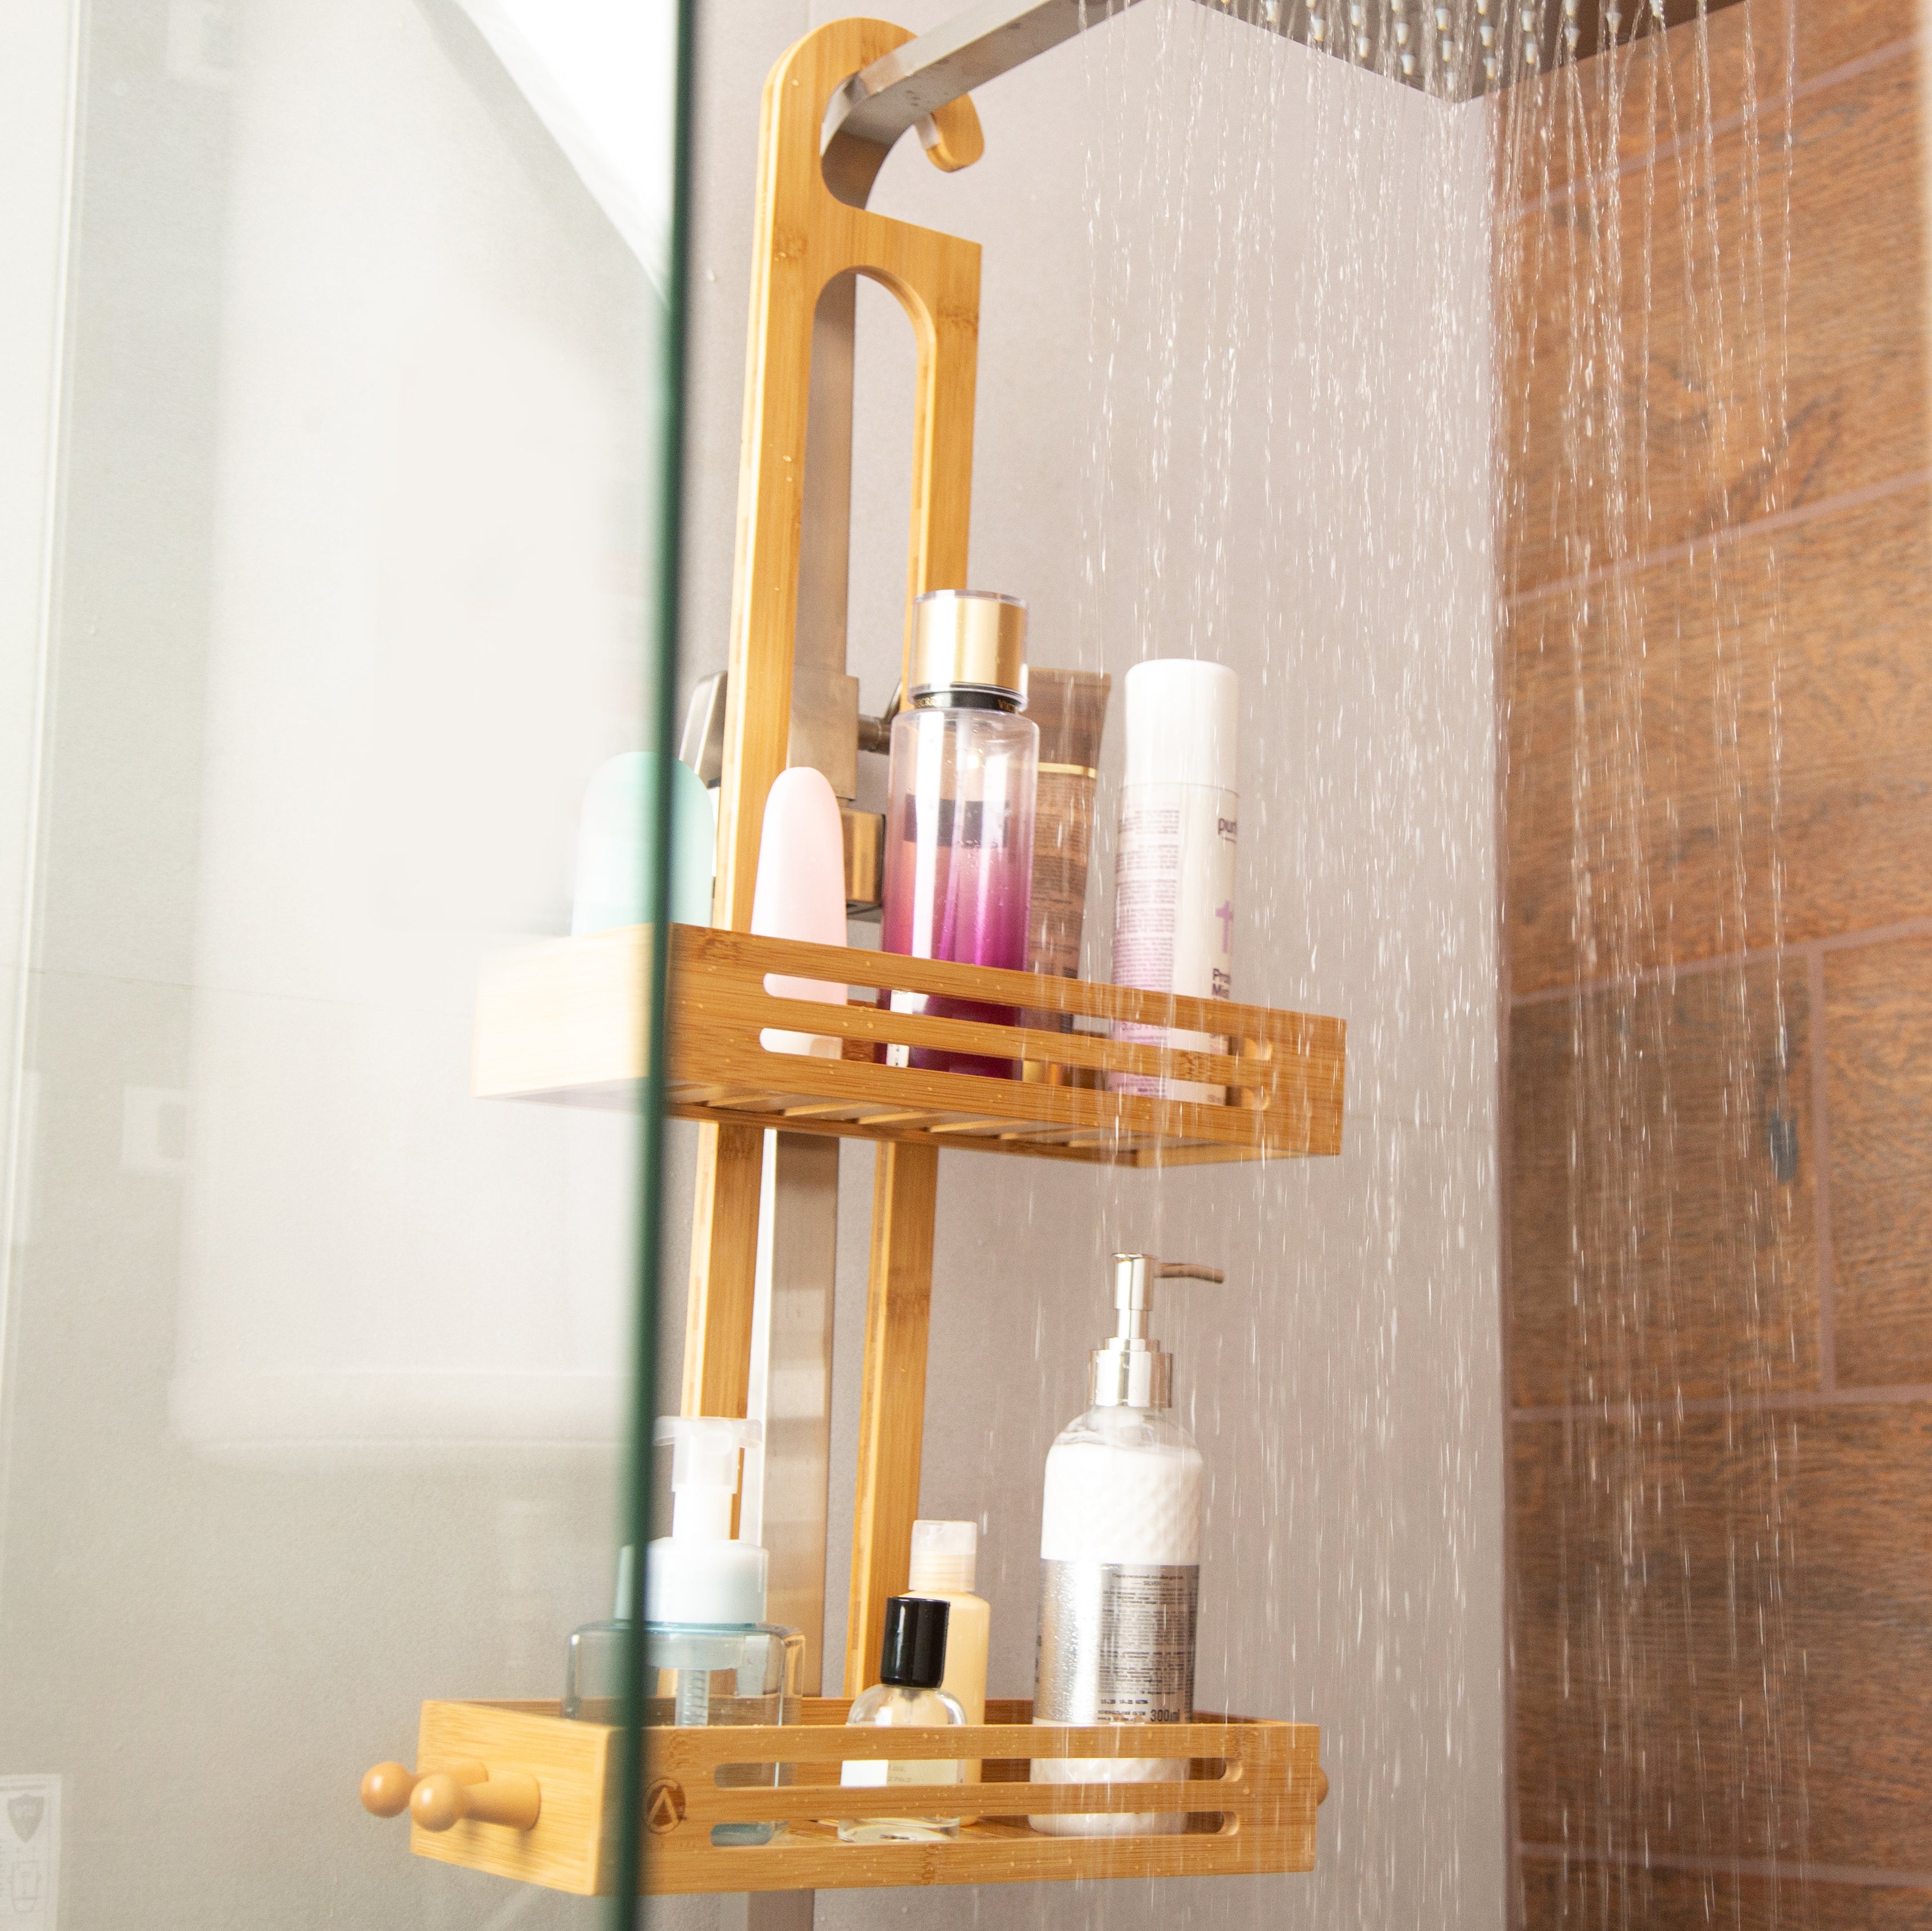 Simple Houseware Bathroom Hanging Shower Head Caddy India